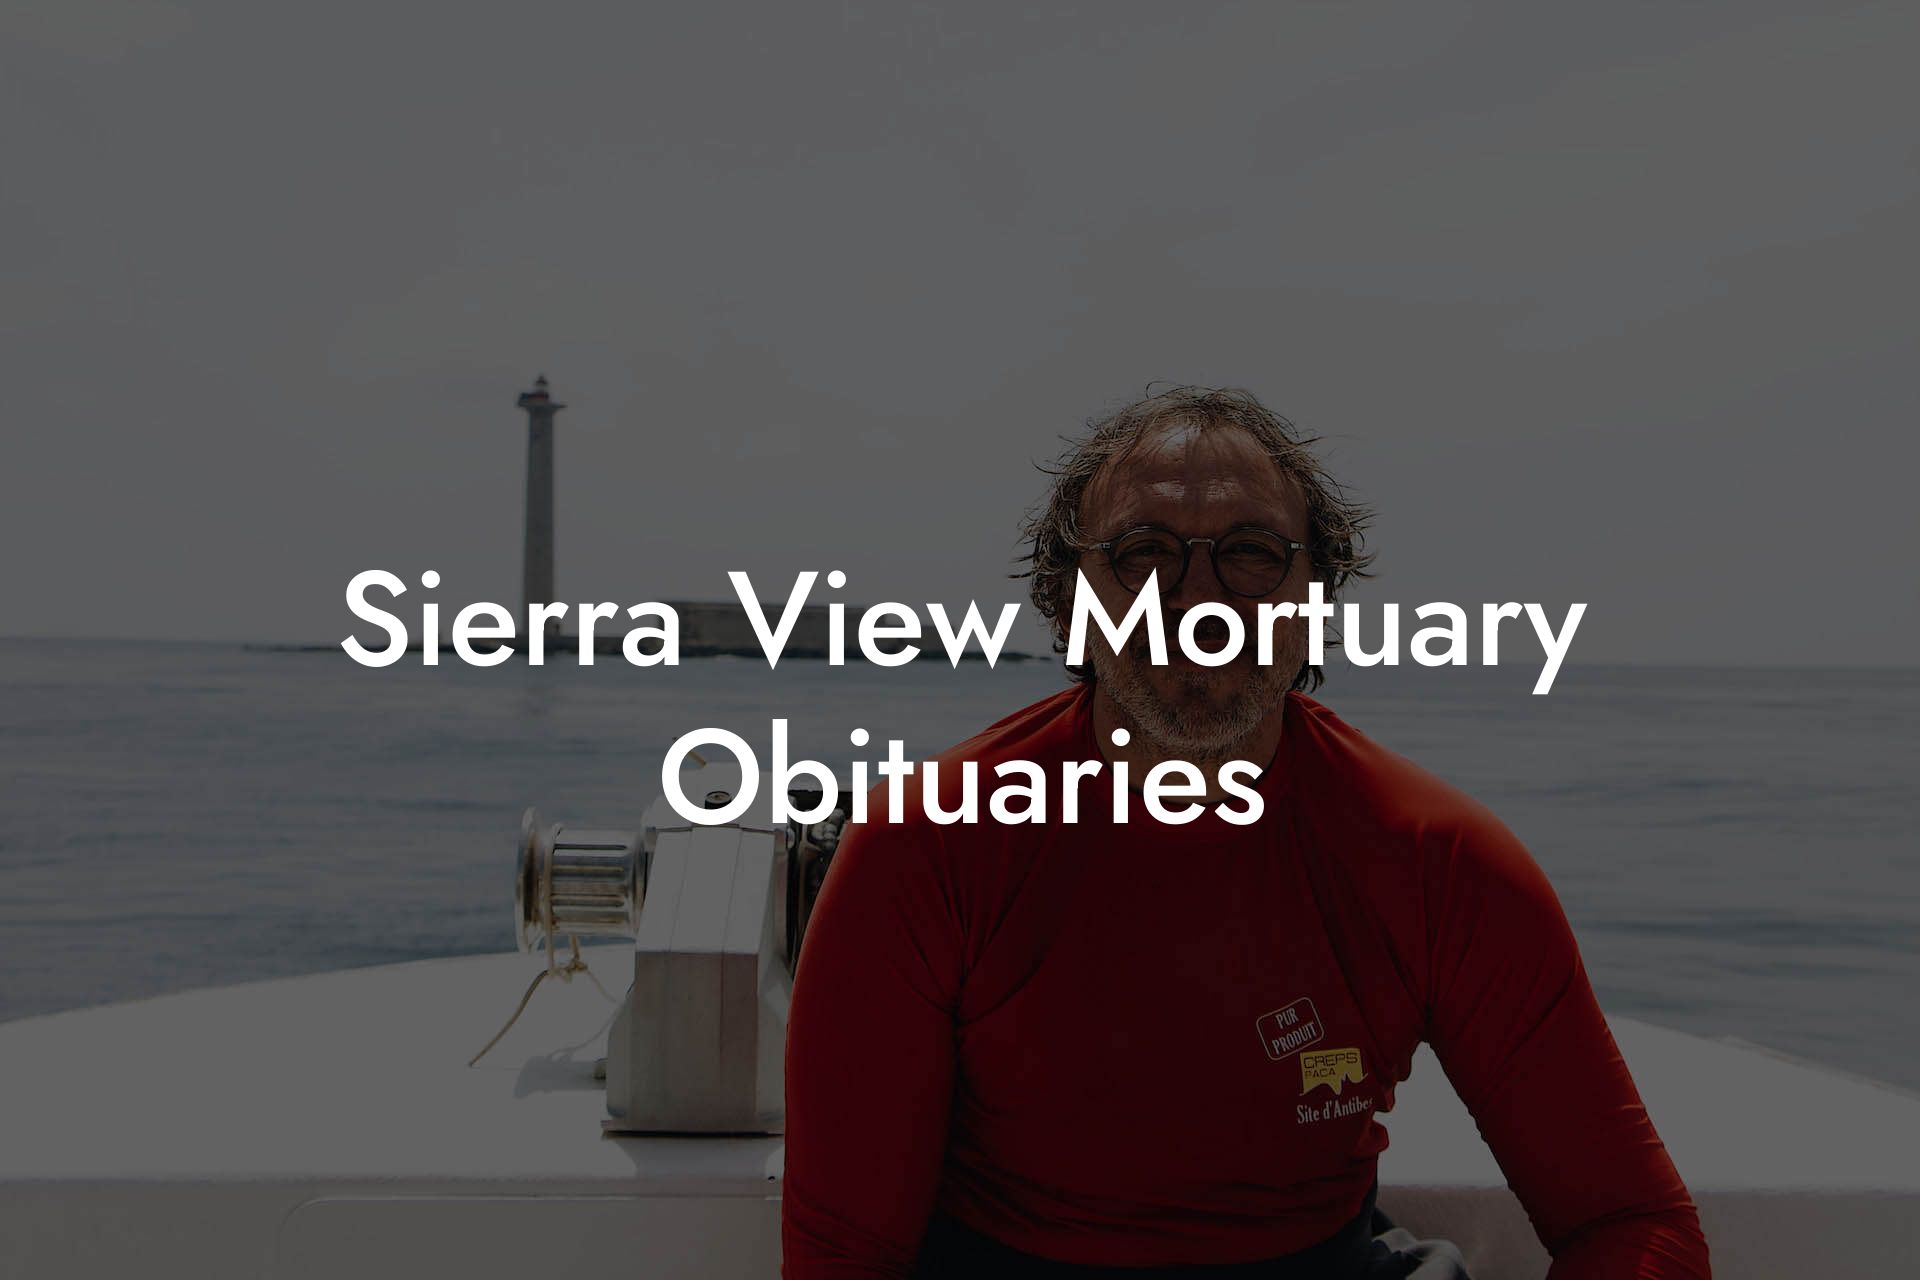 Sierra View Mortuary Obituaries